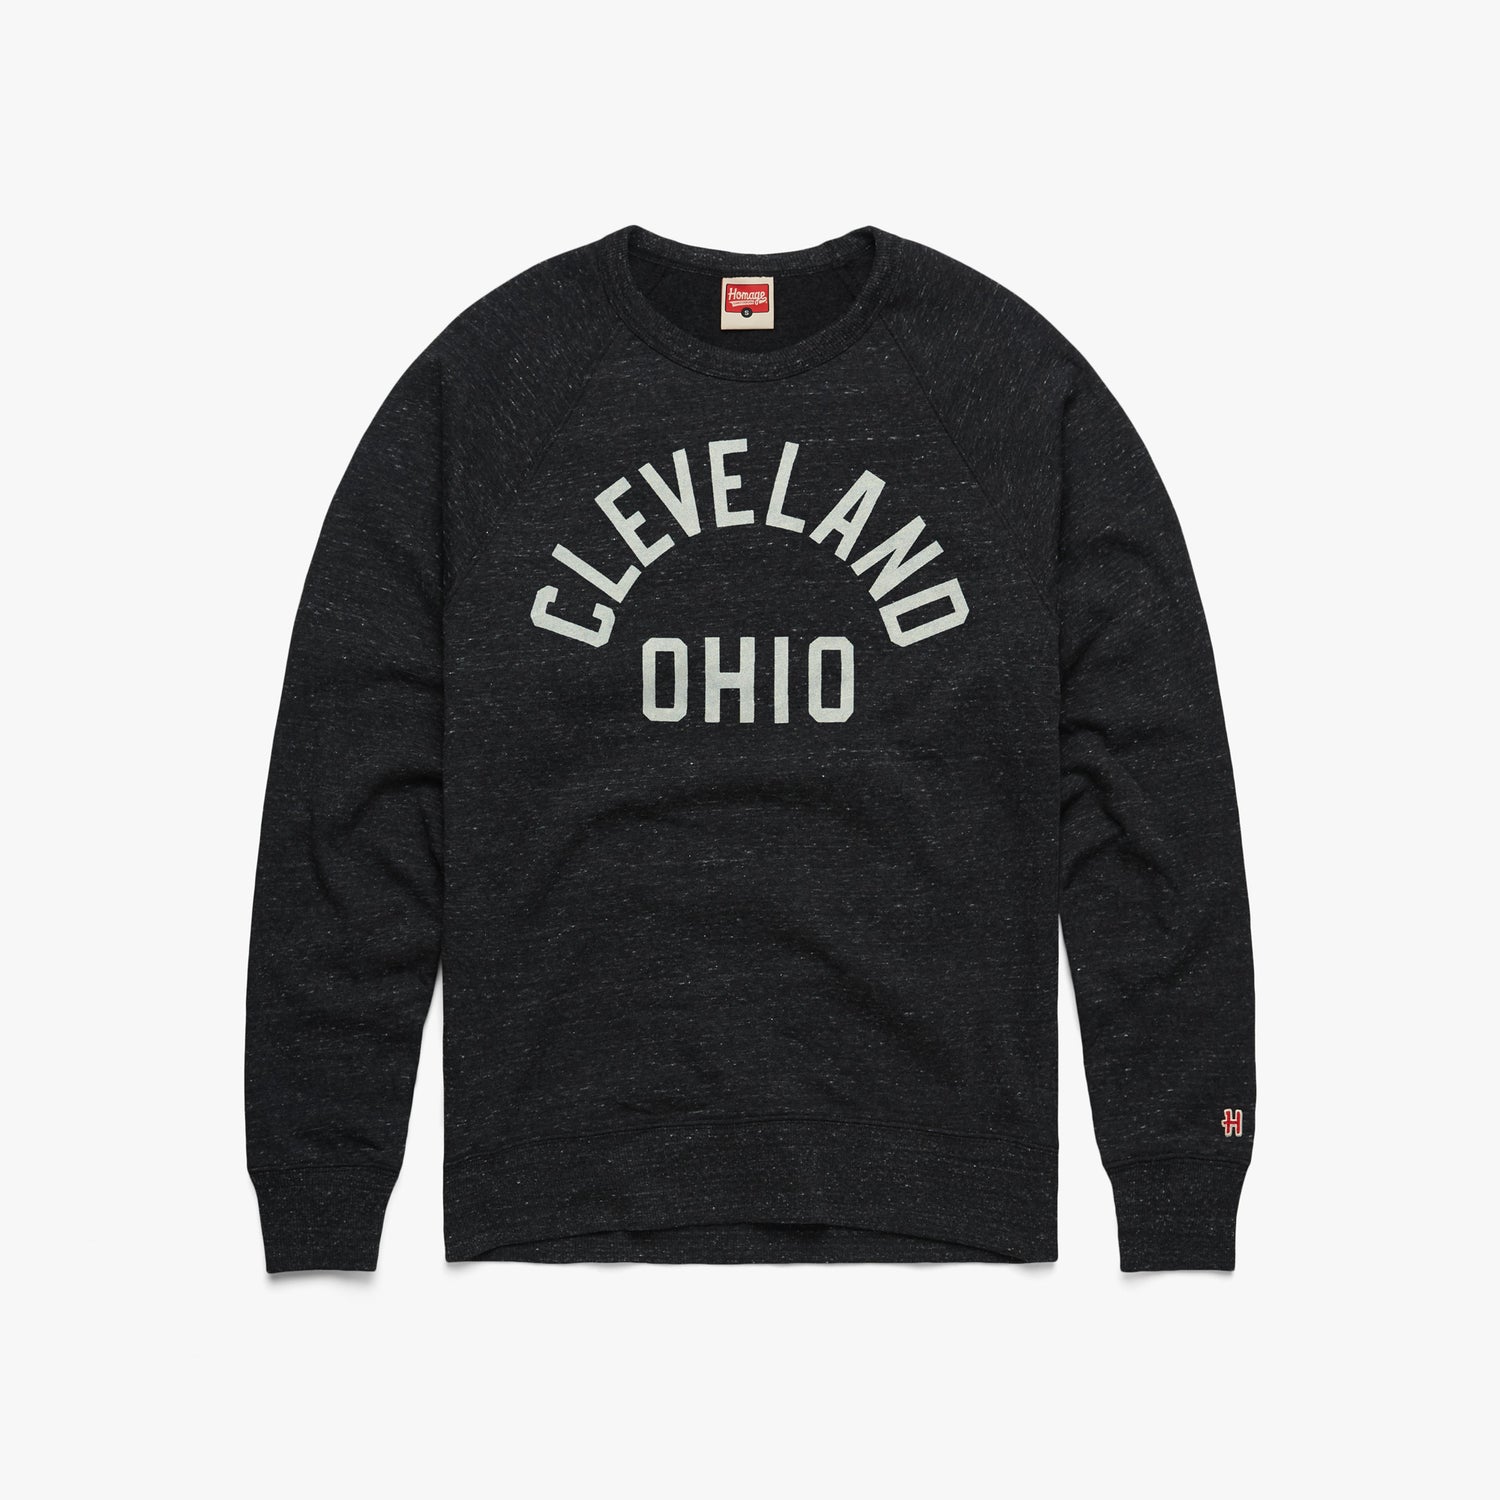 Cleveland Ohio Crewneck